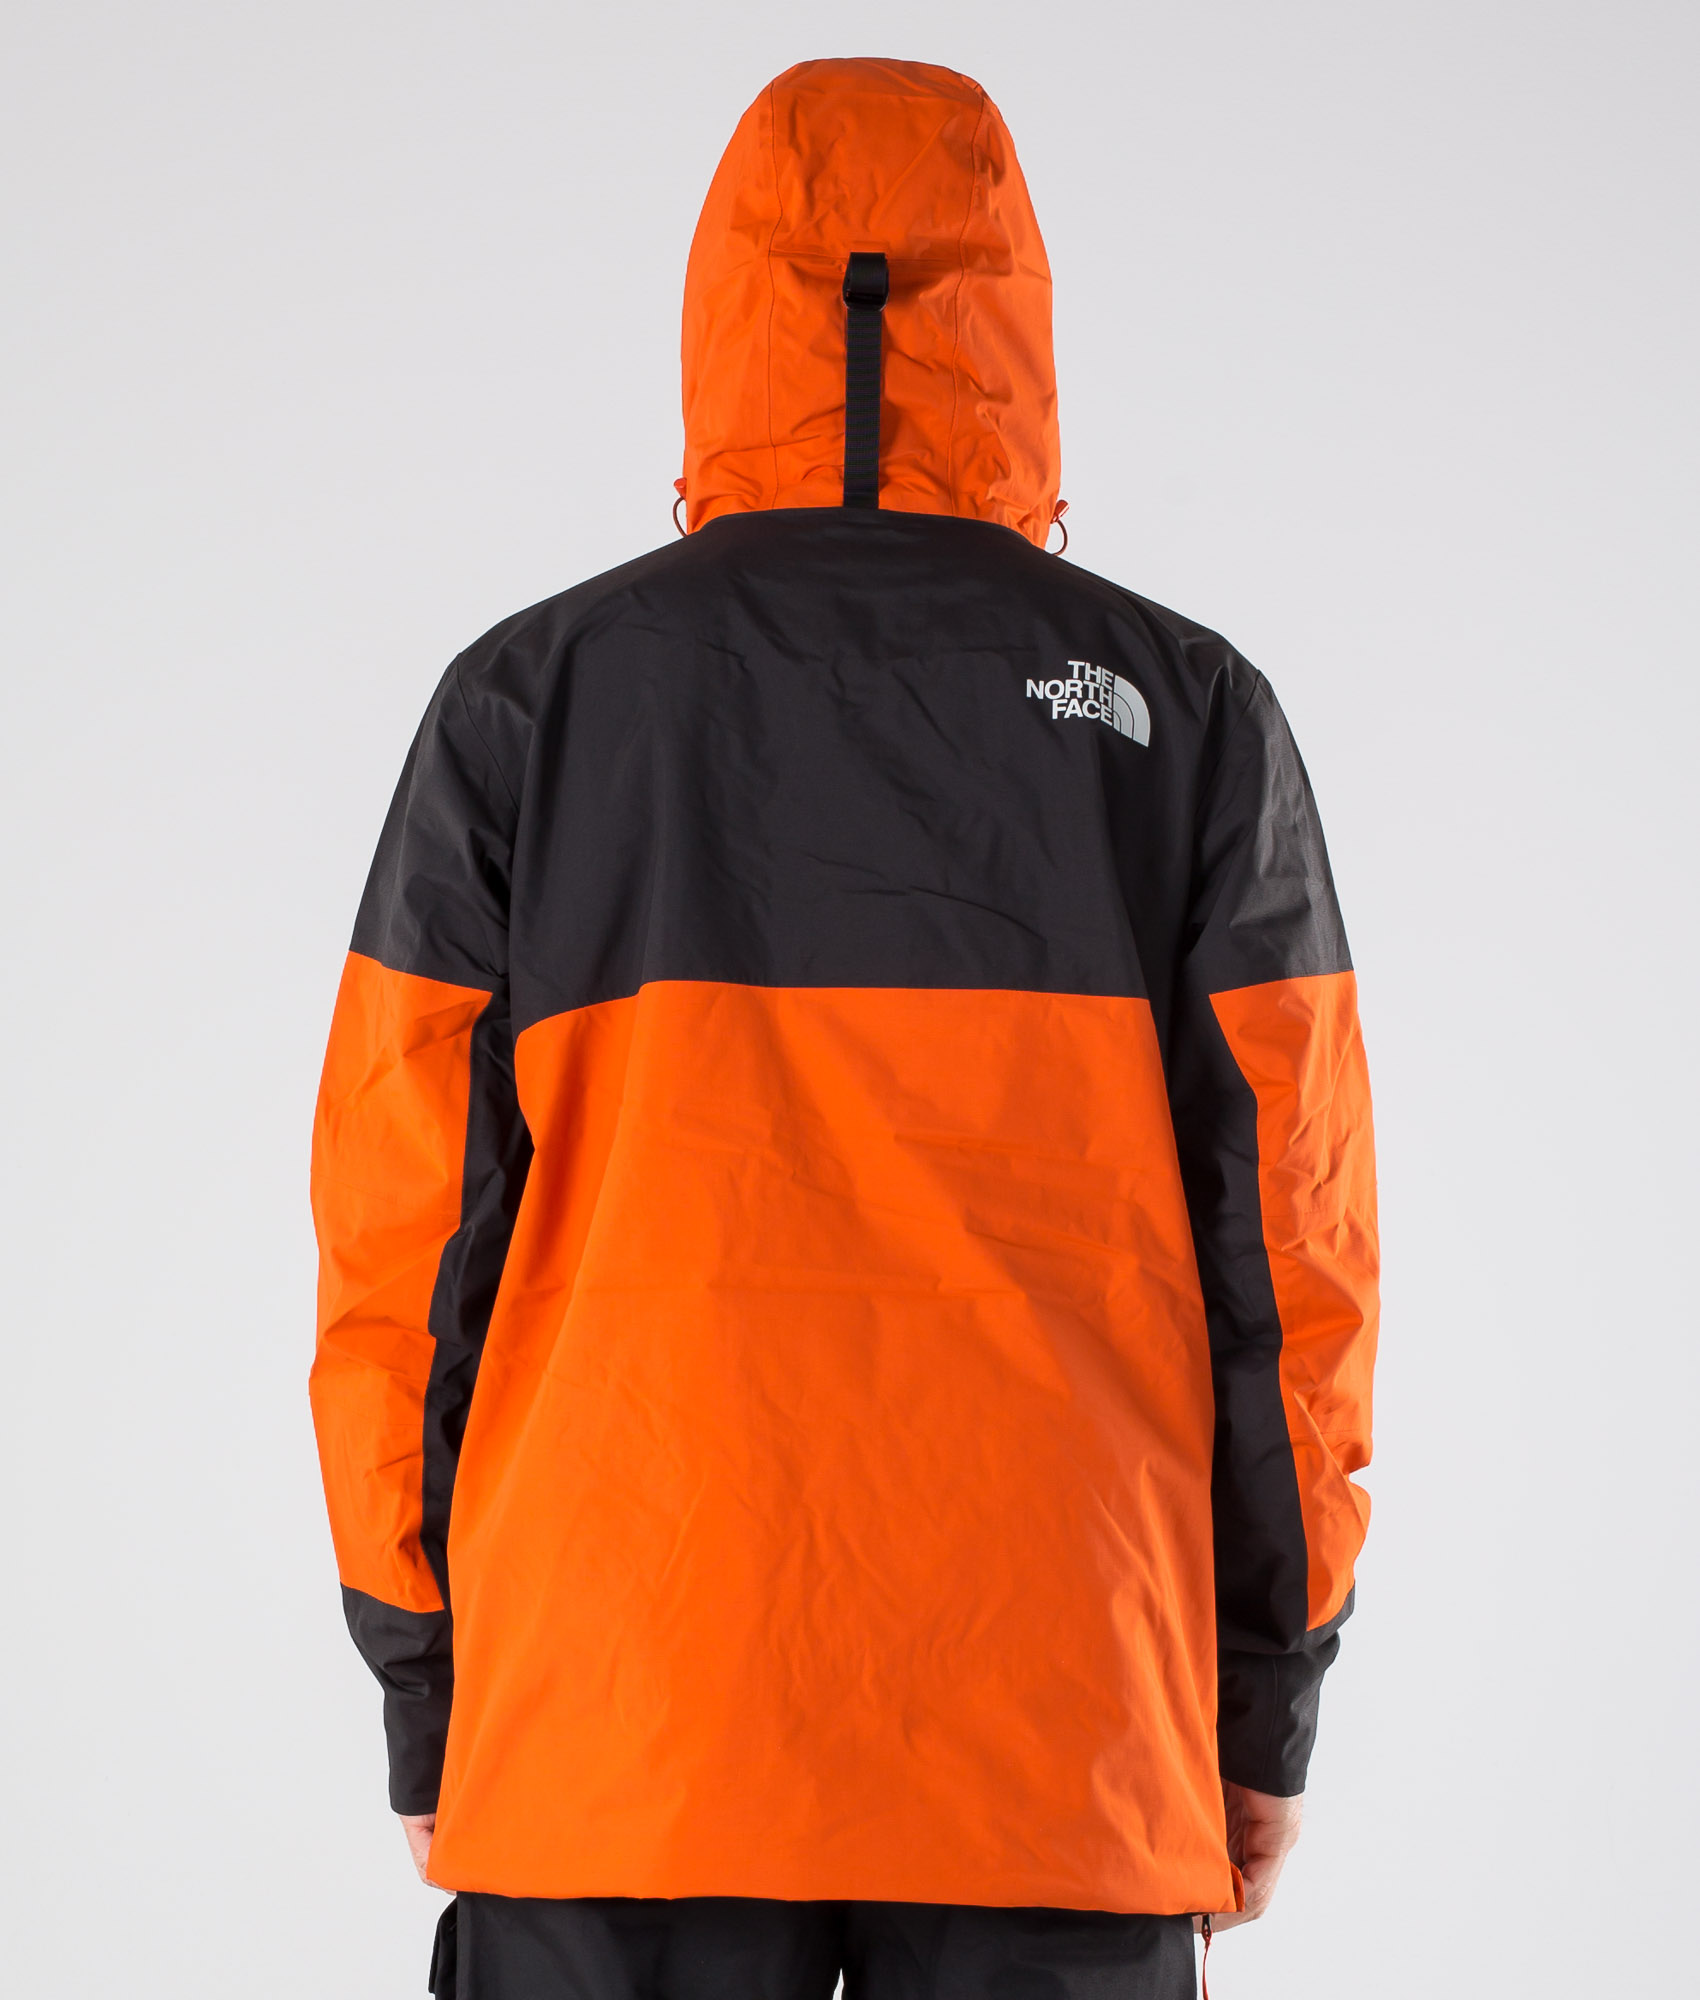 orange and black north face jacket